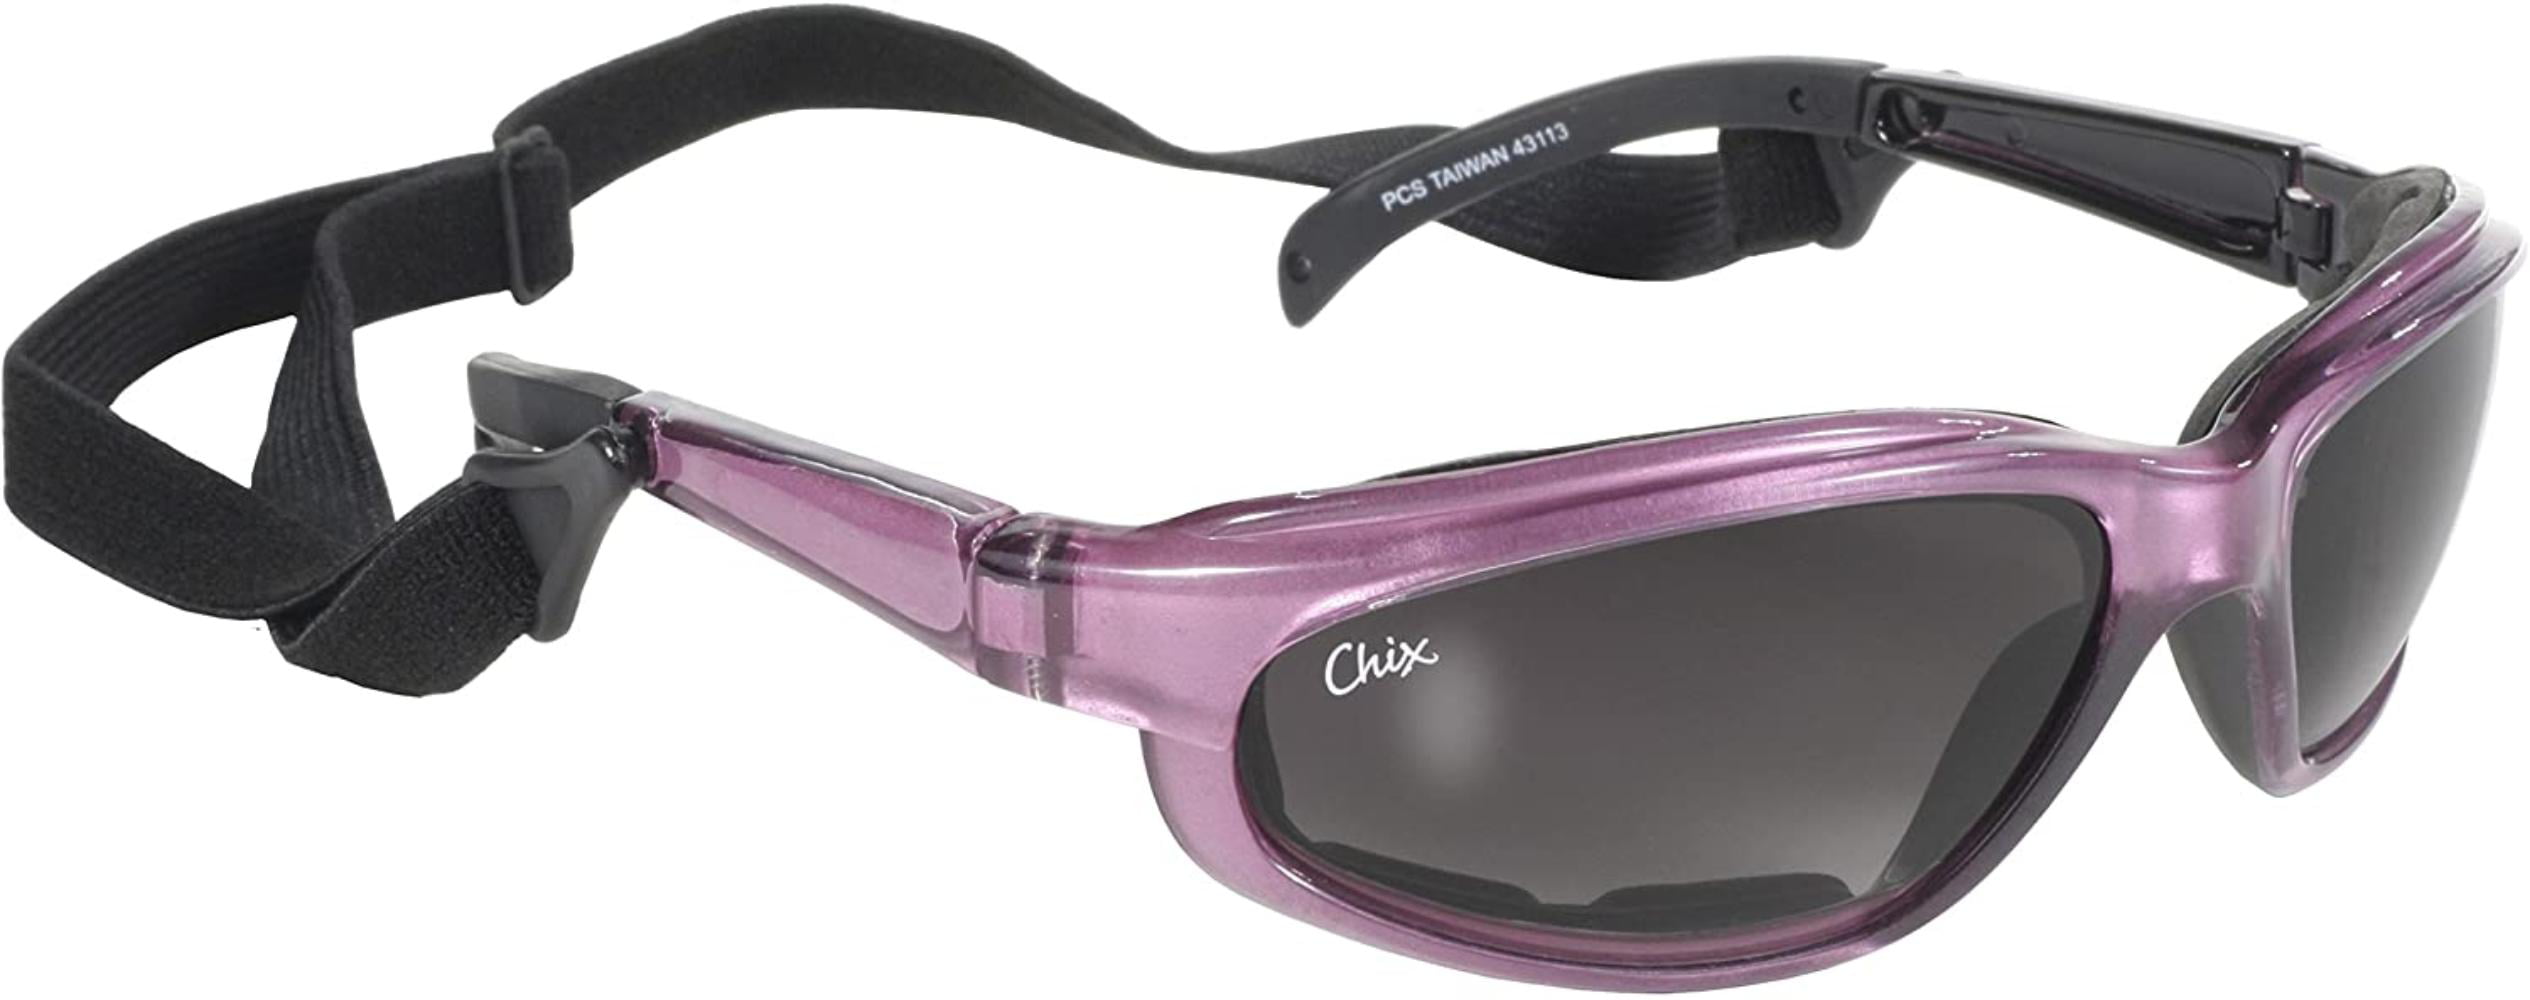 Pacific Coast Chix Freedom Sunglasses Pearl Purple Frame/Gray Fade Lens 